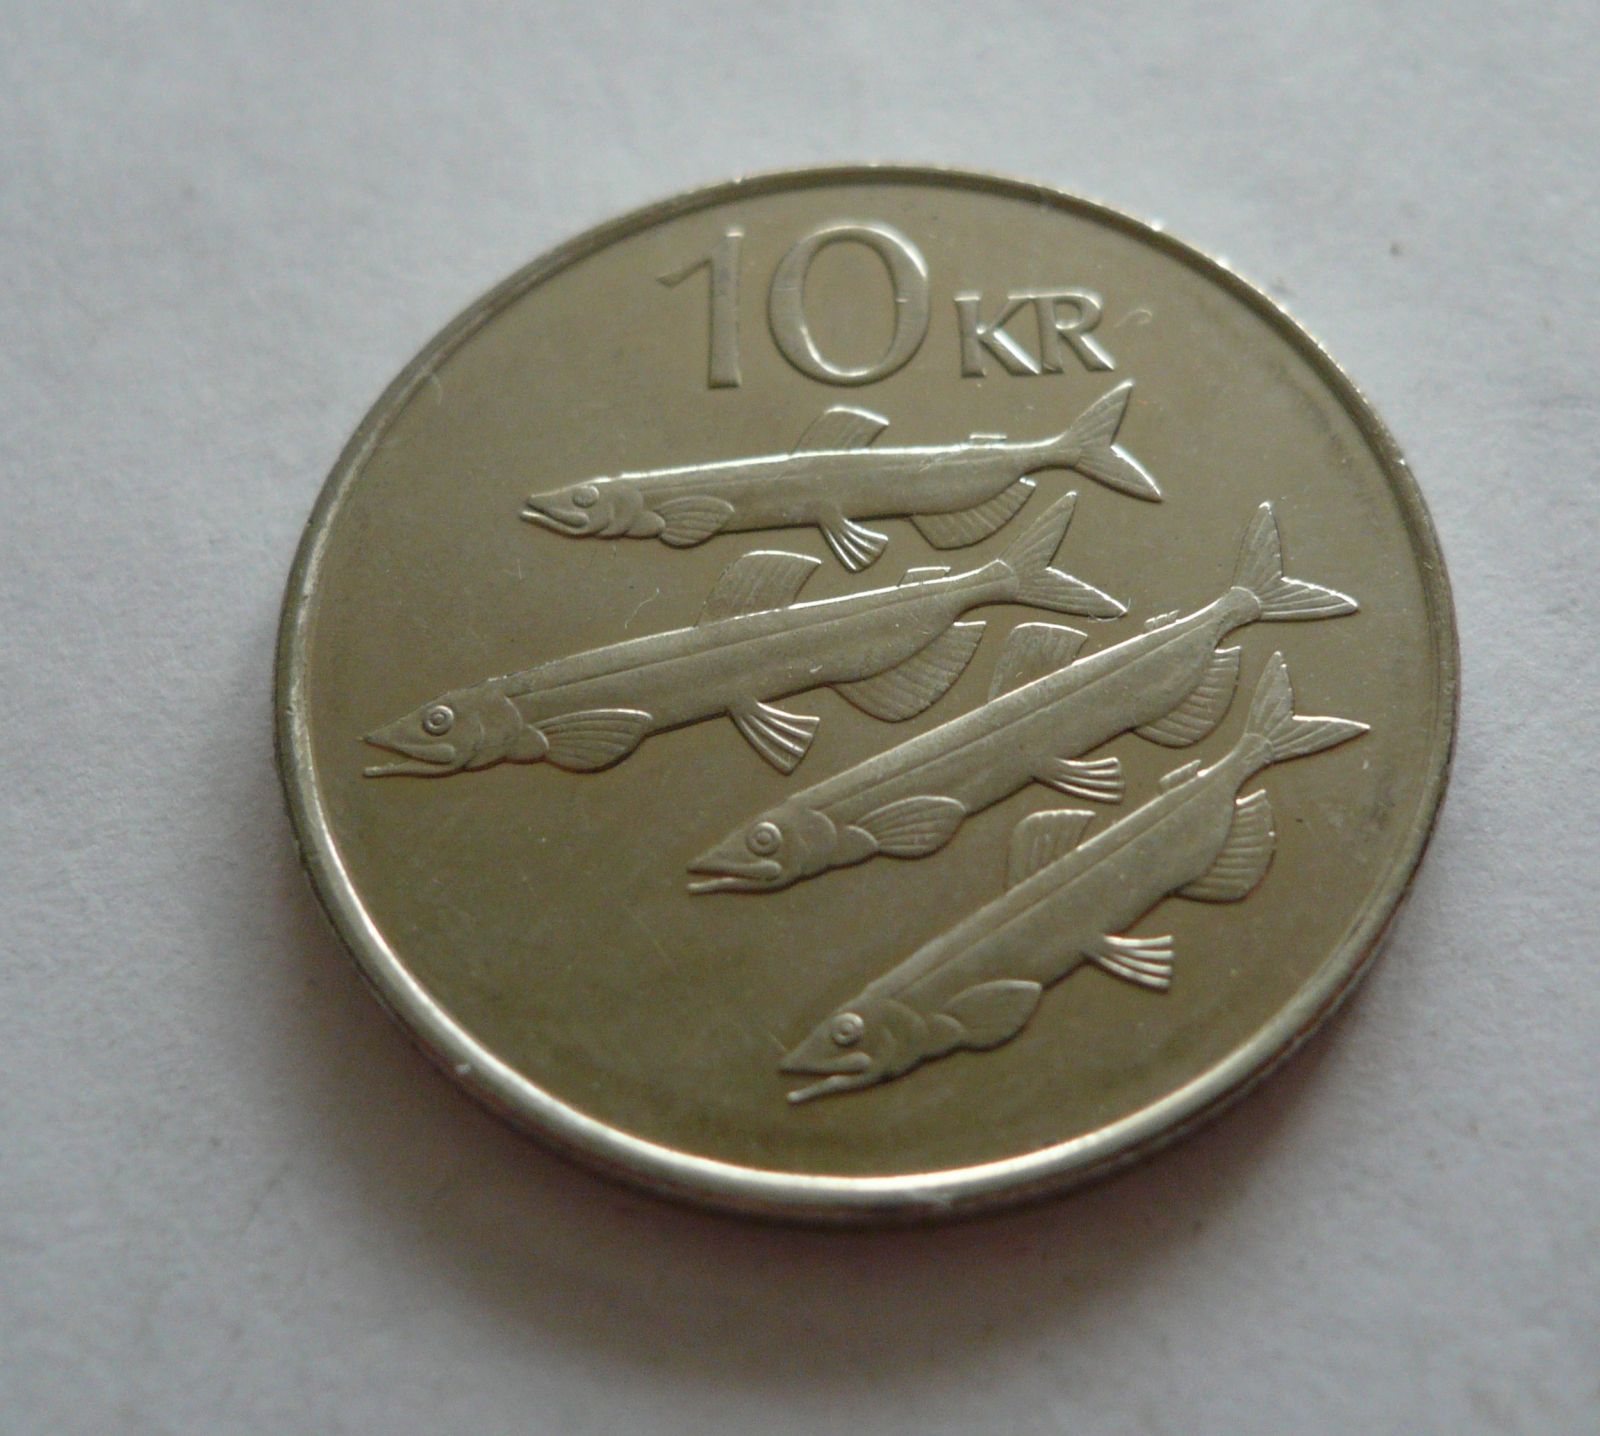 10 Krone, 1996, Island